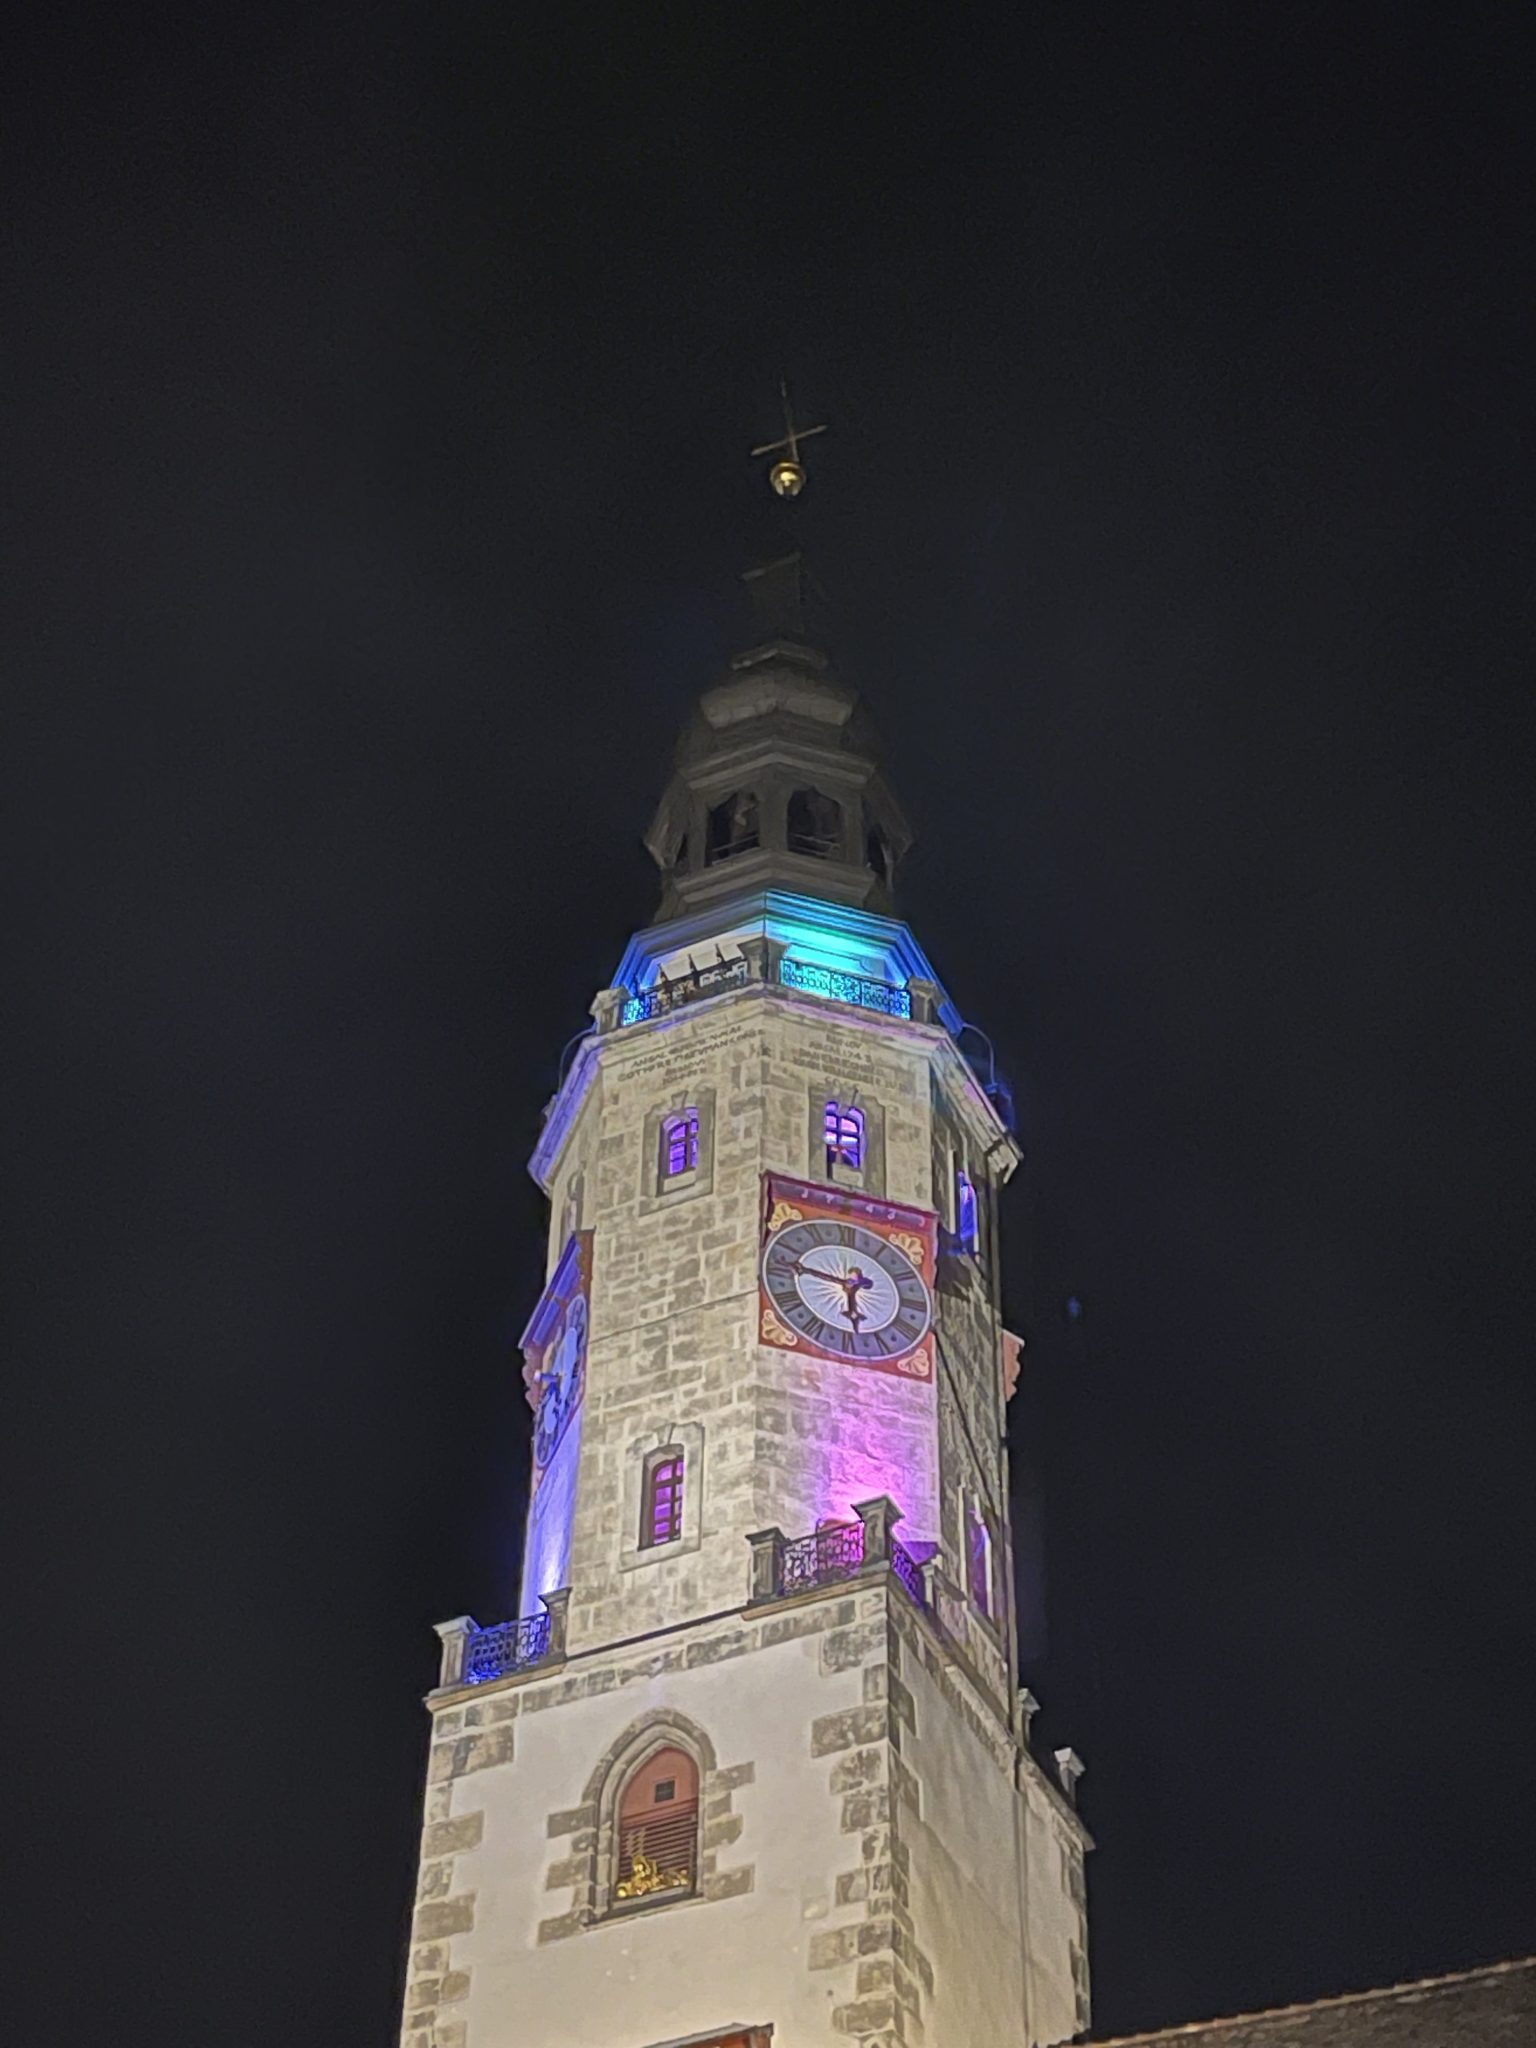 Görlitz (Germany) - Town Hall Tower (in lights)